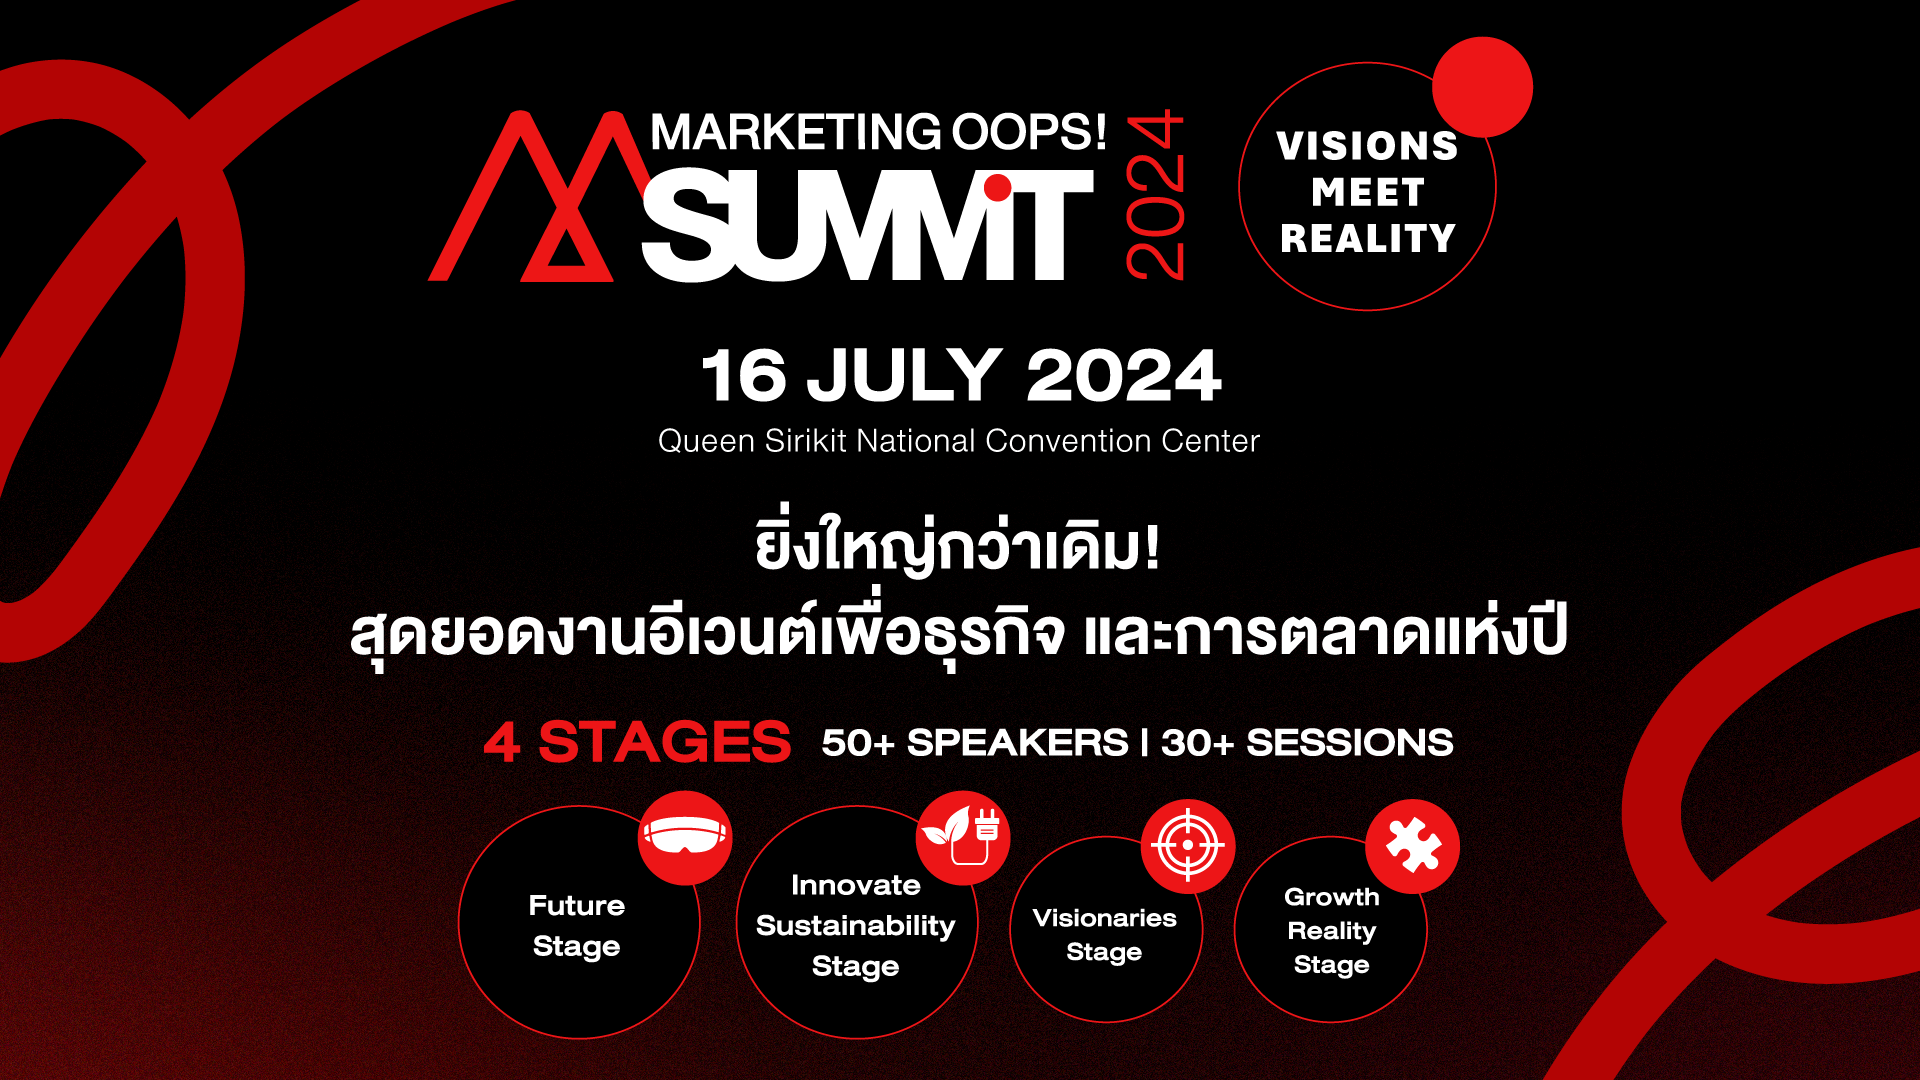 Marketing Oops! Summit 2024